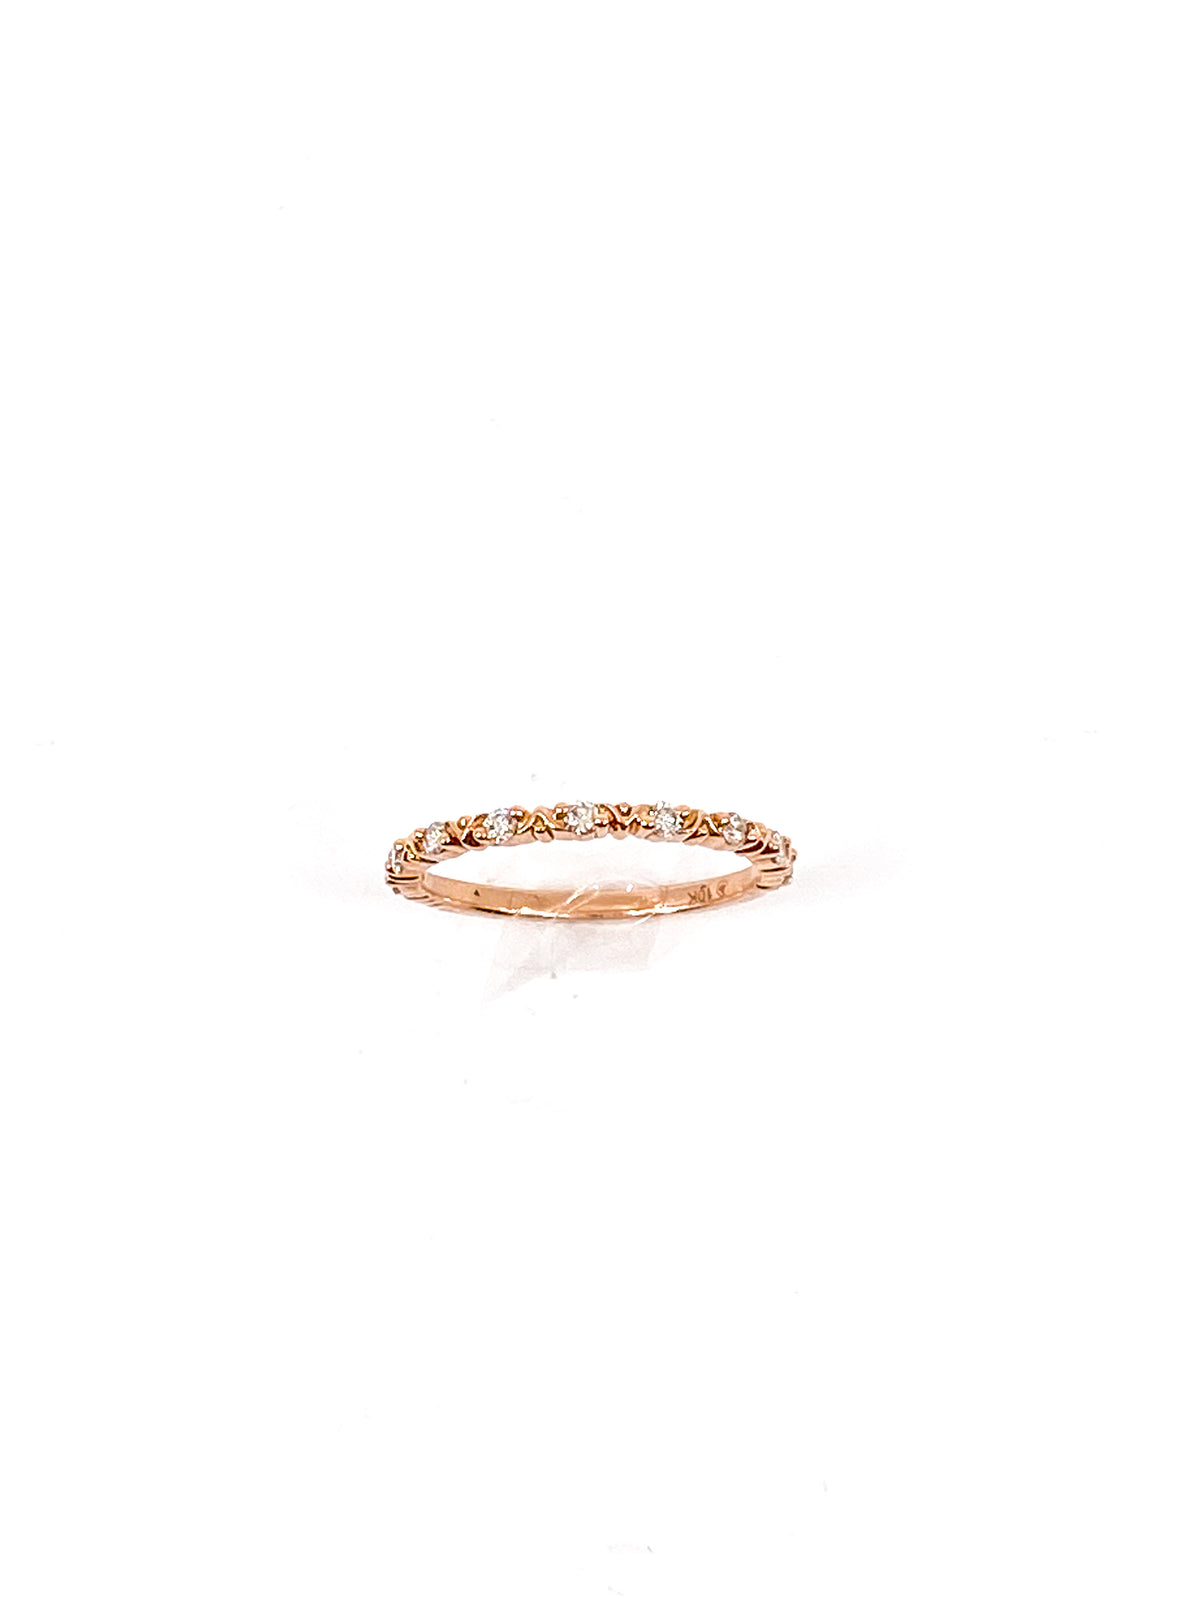 10K Rose Gold 0.18cttw Diamond Ring, size 6.5